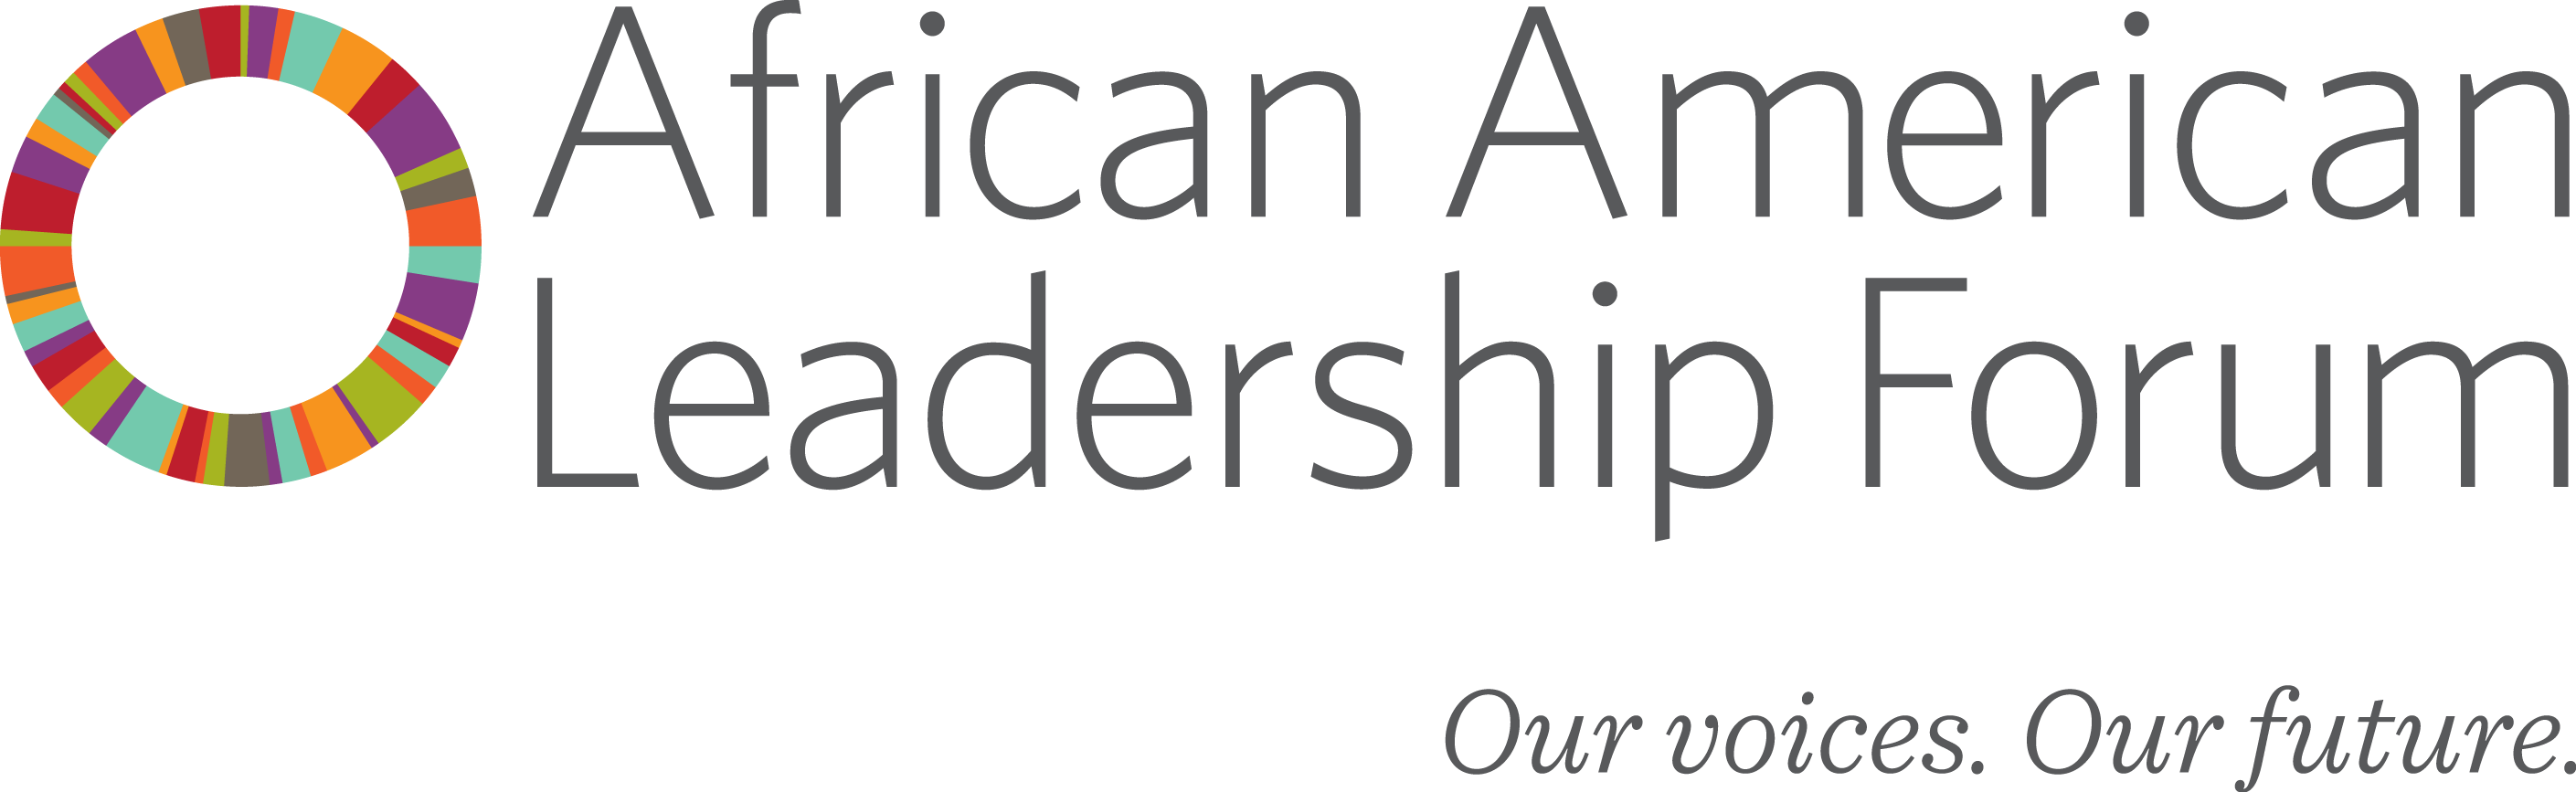 African American Leadership Forum logo